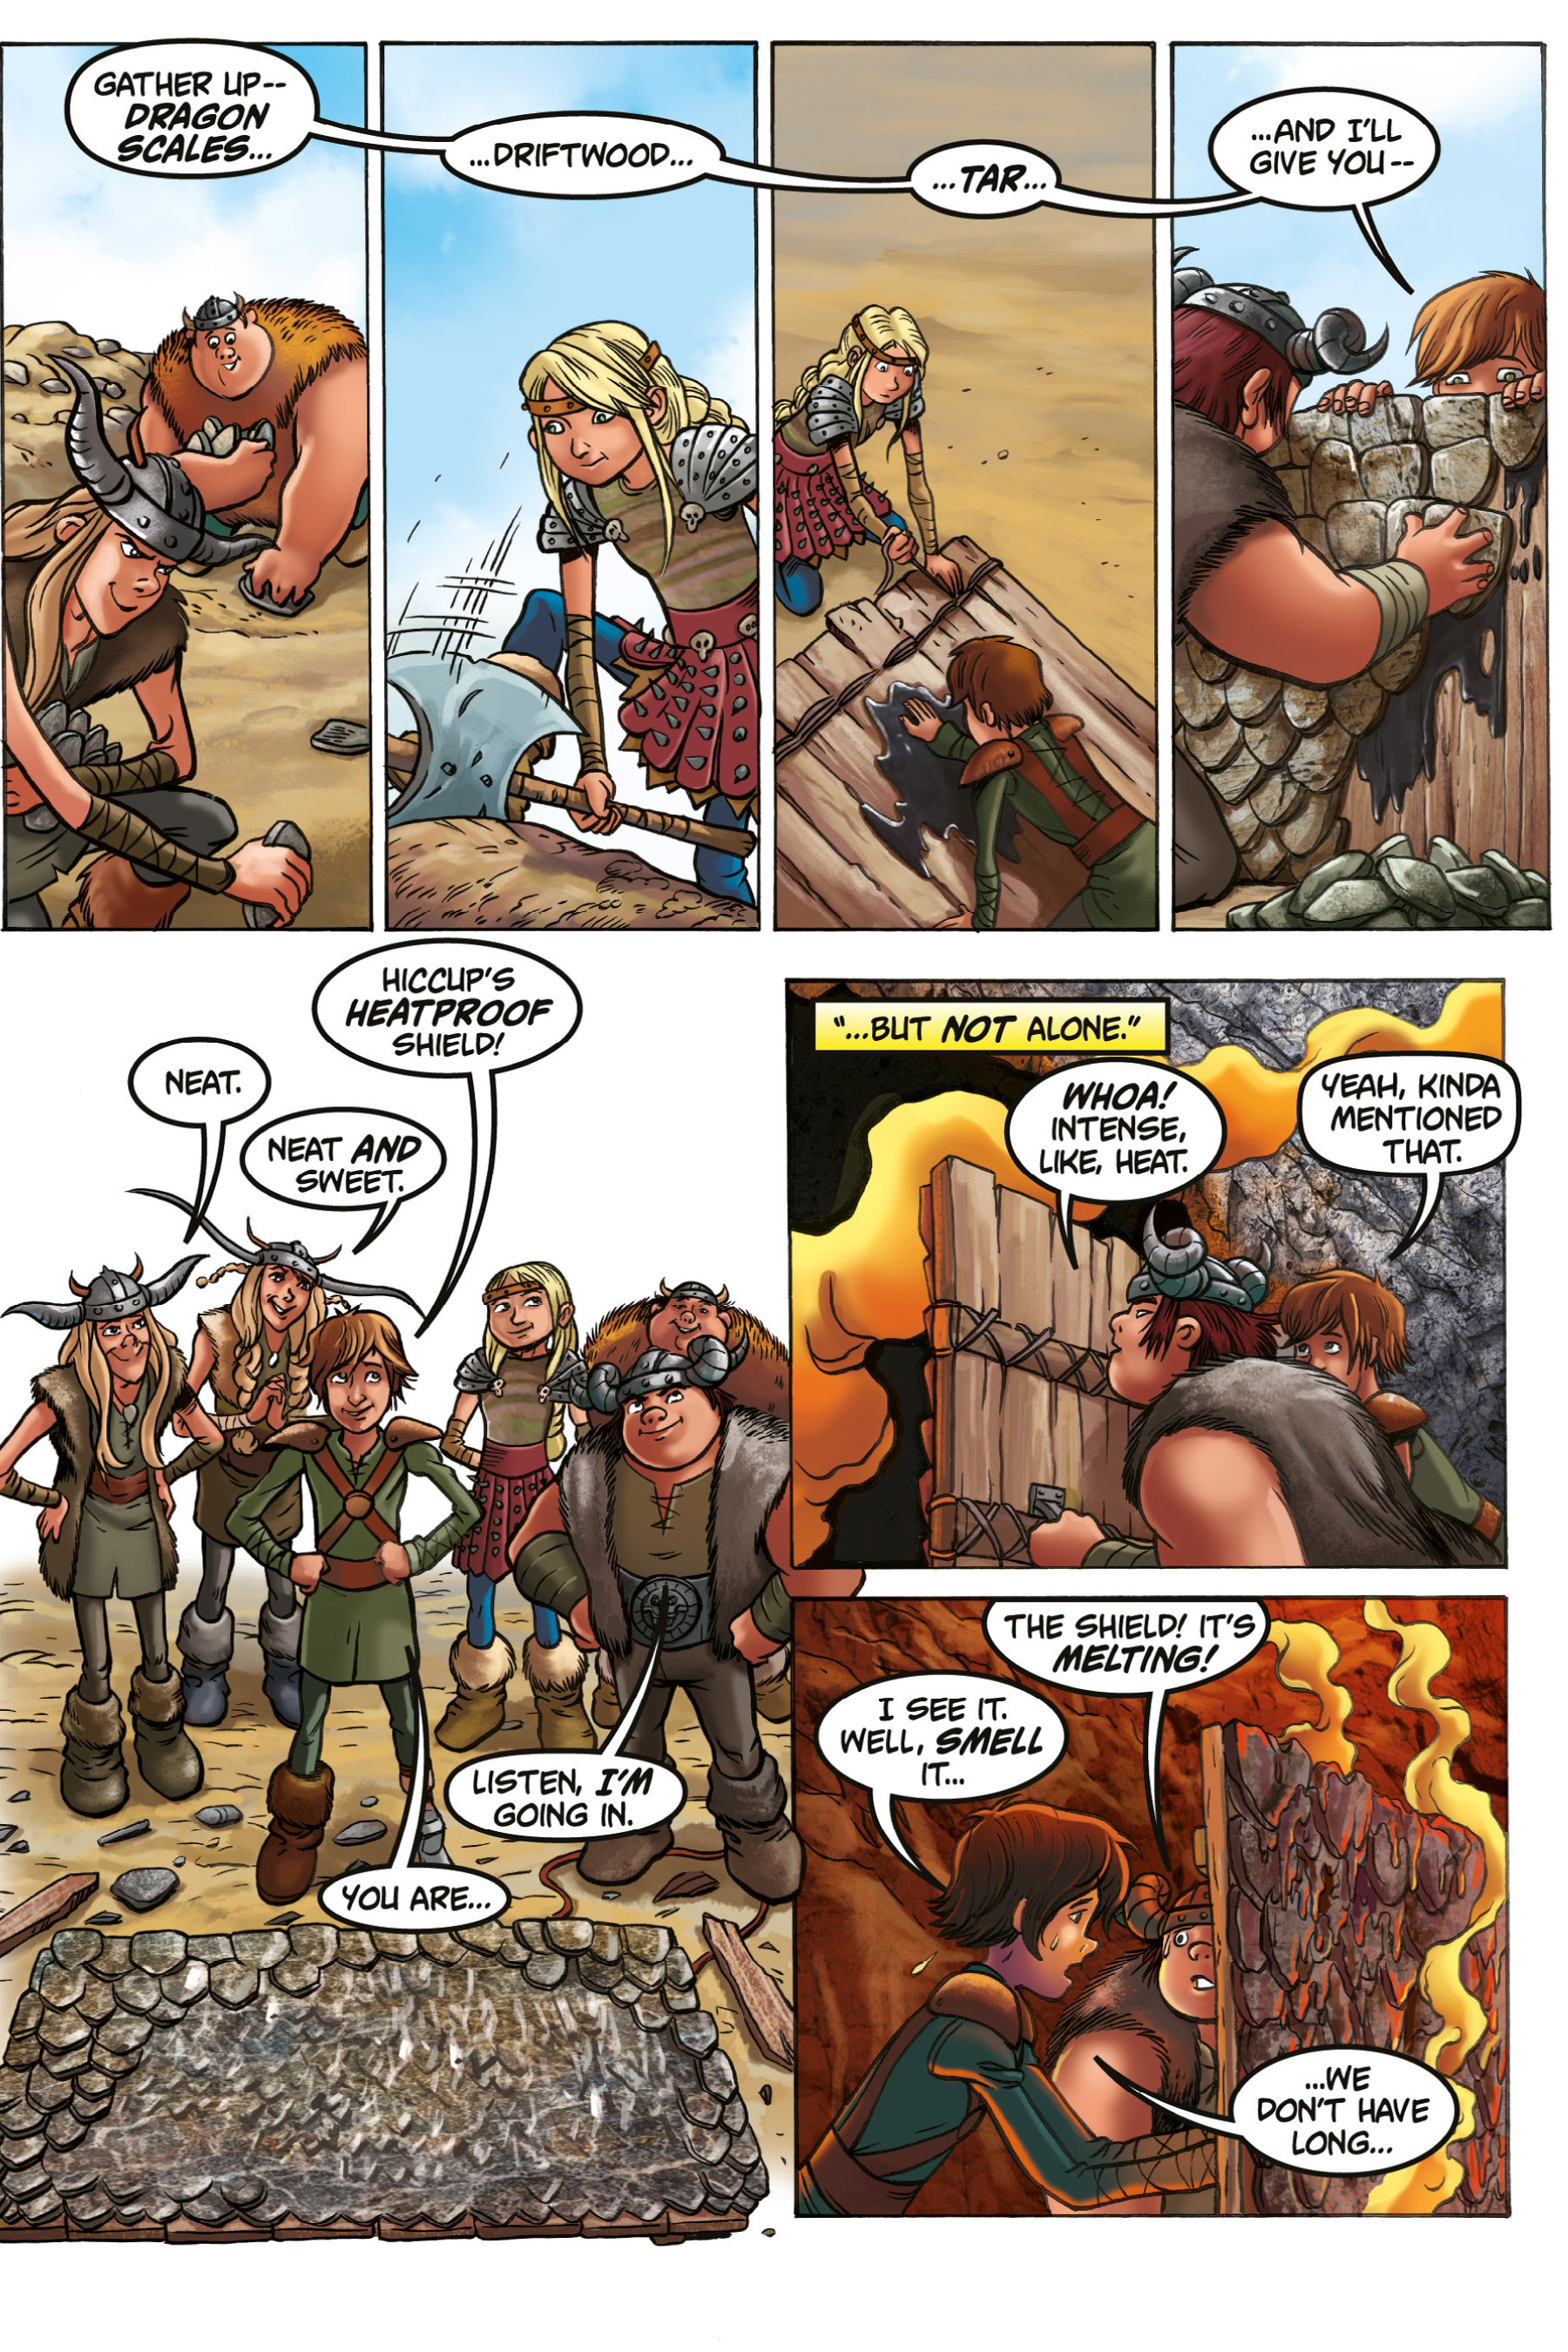 Read online DreamWorks Dragons: Riders of Berk comic -  Issue #1 - 55